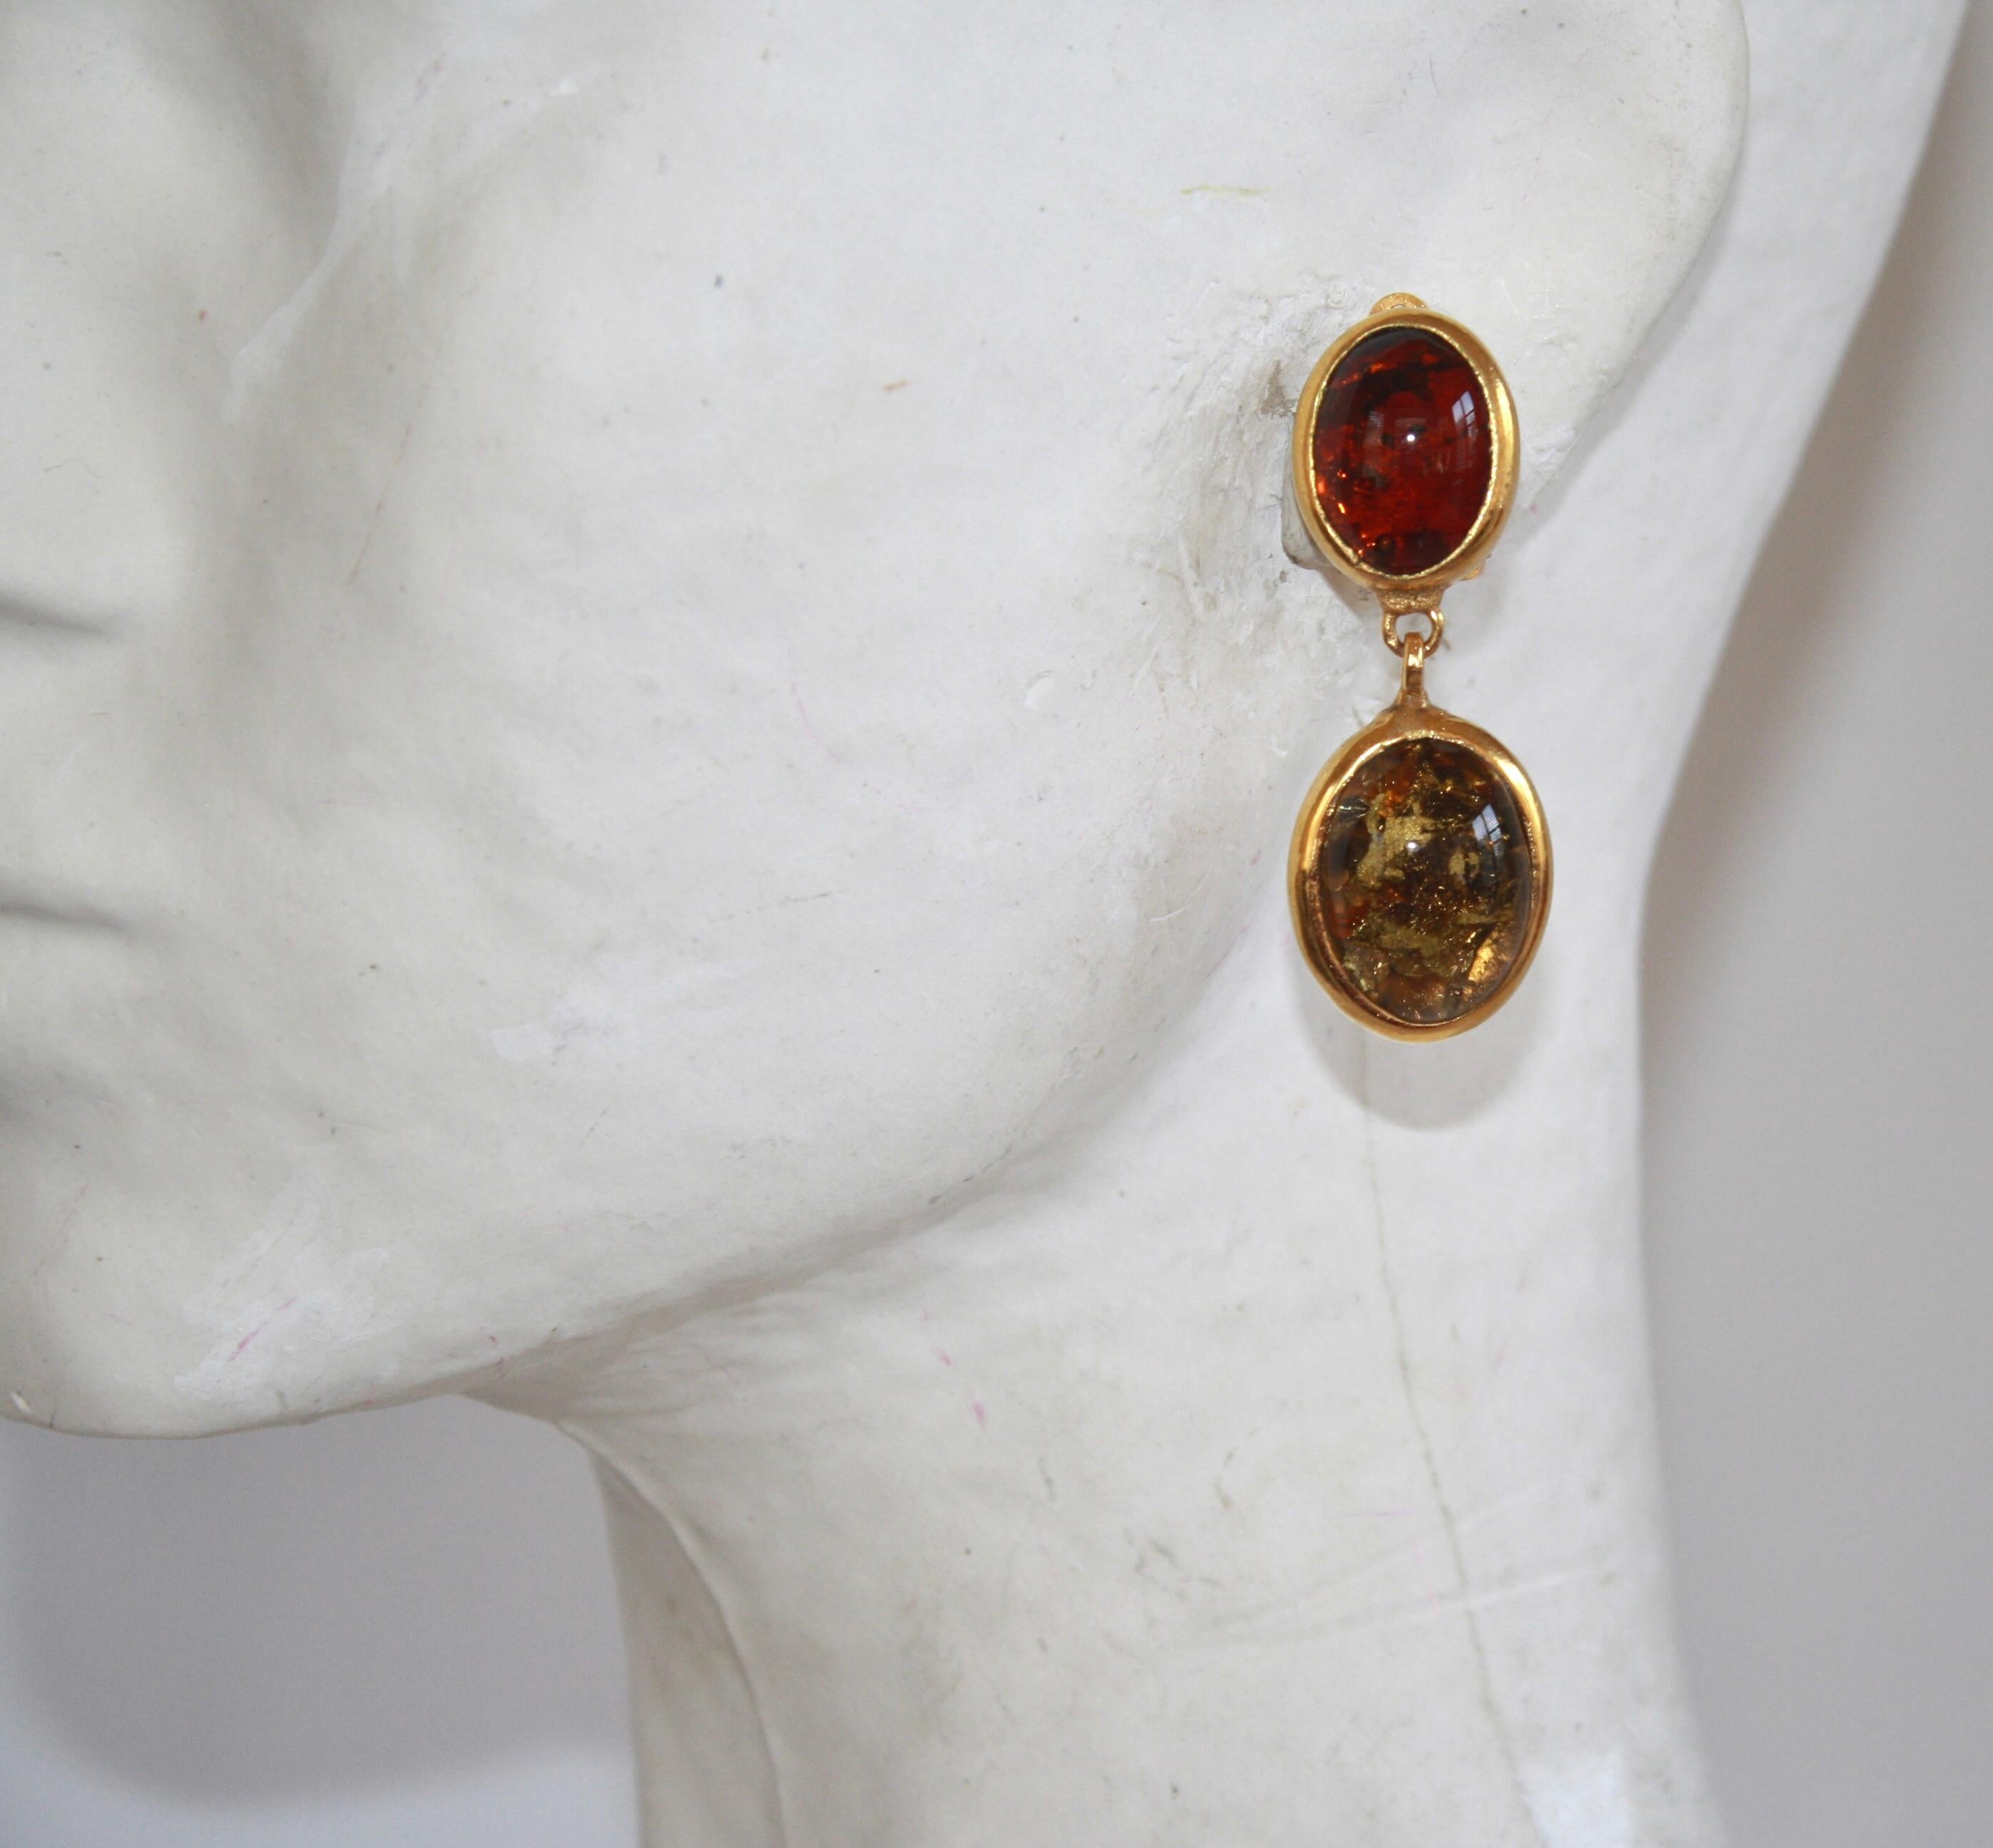 Handmade pate de verre glass earrings with gold leaf specks on gilded brass.